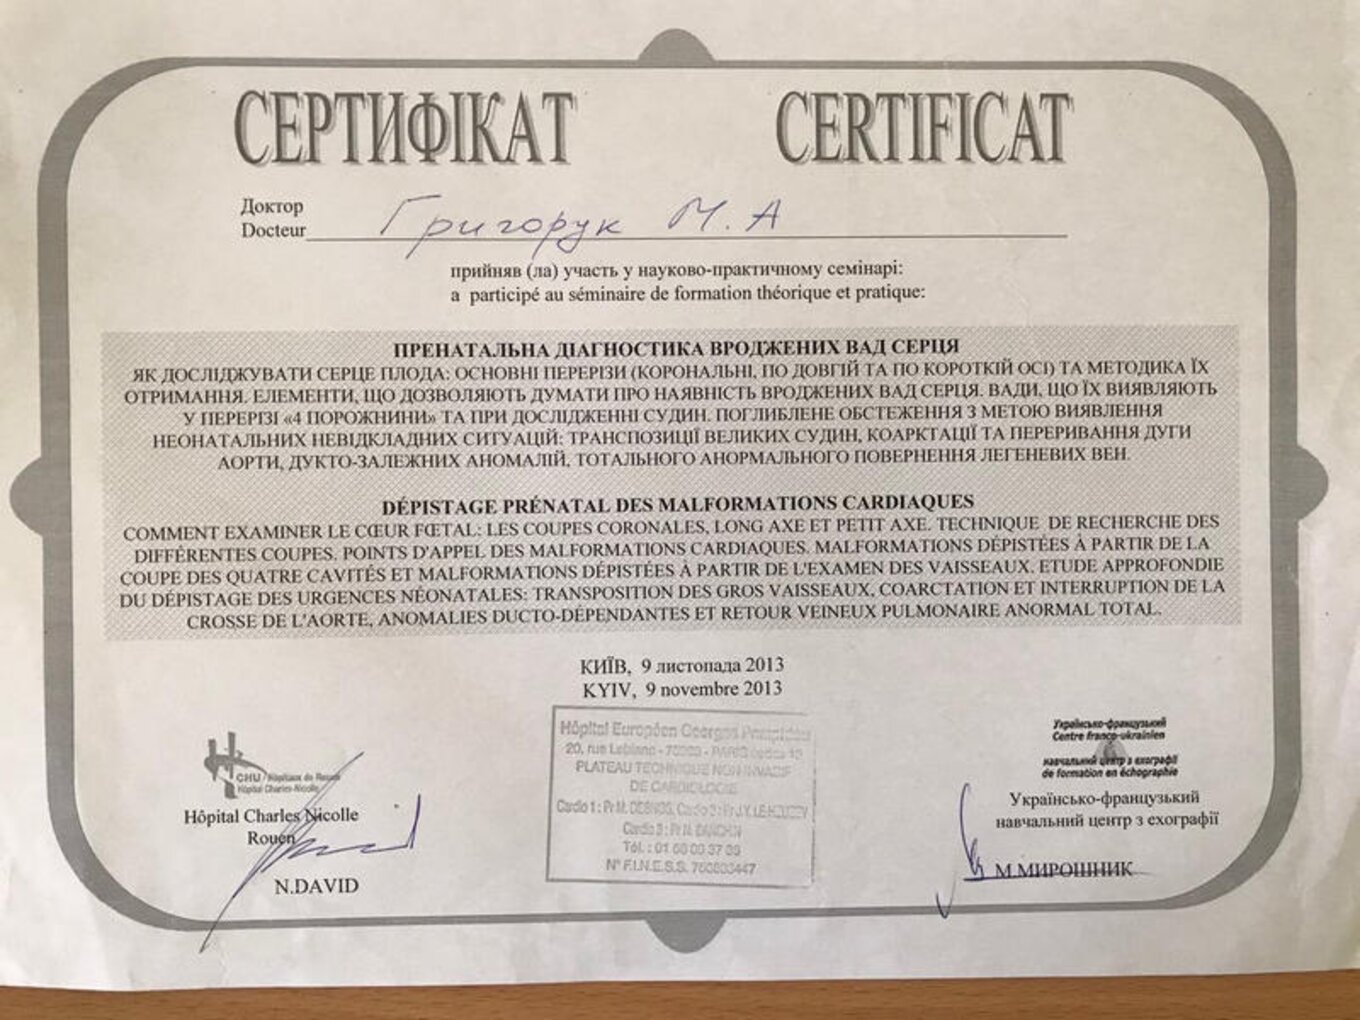 certificates/grigoruk-maksim-antonovich/hemomedika-cert-grigoruk-01.jpg